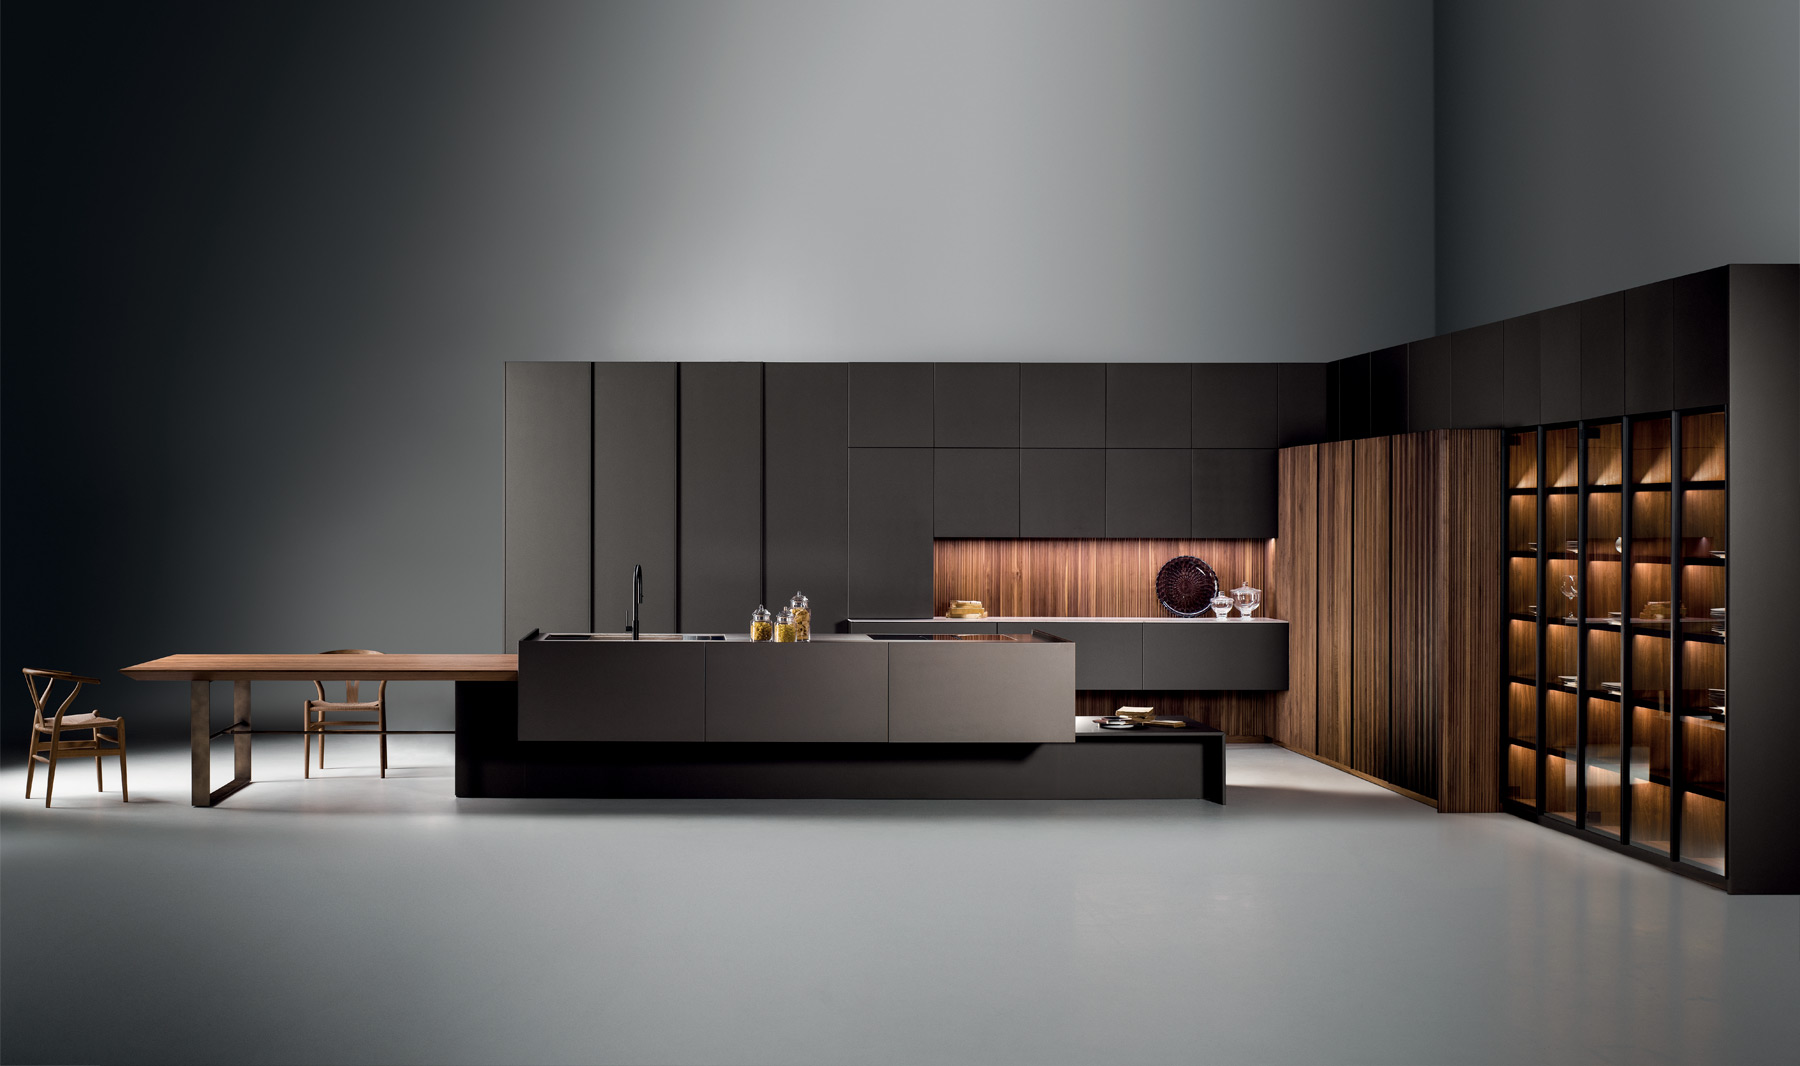 Modern kitchen in walnut and dark color cabinets